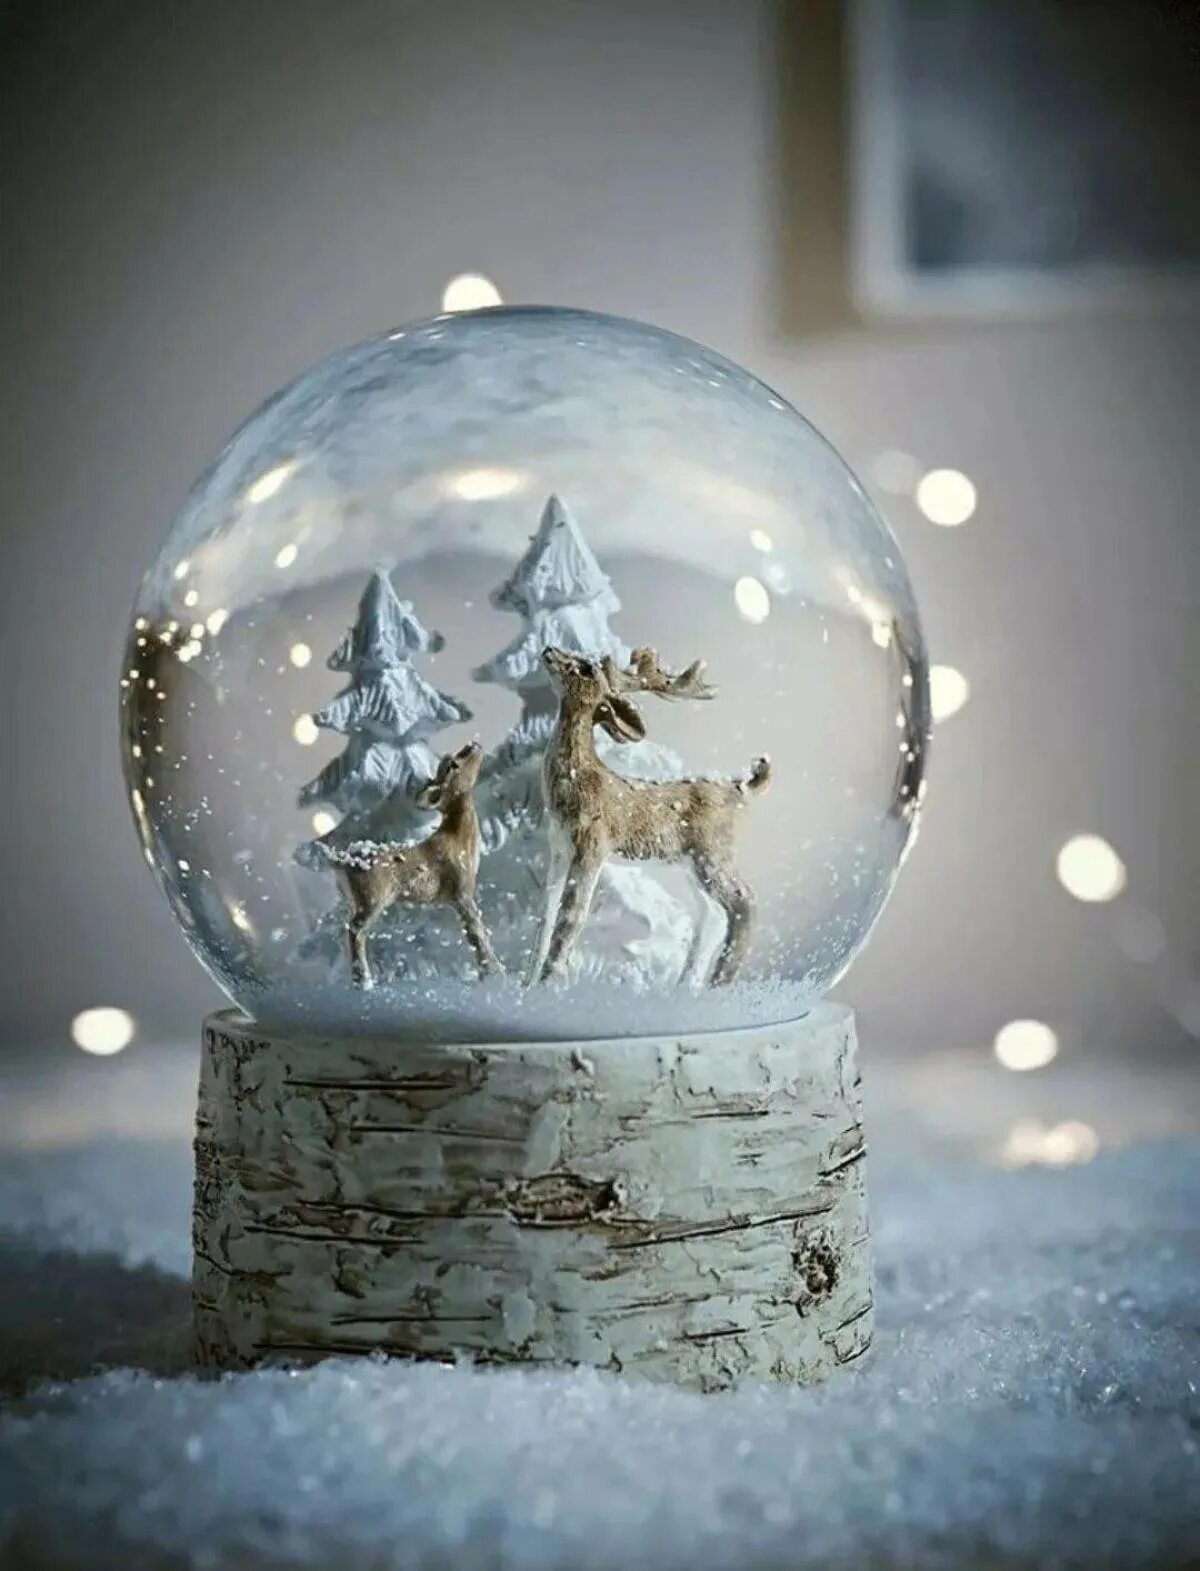 Midland снежный шар. Snow Globe снежный-шар. Snowball снежный шар. Новогодний стеклянный шар со снегом.